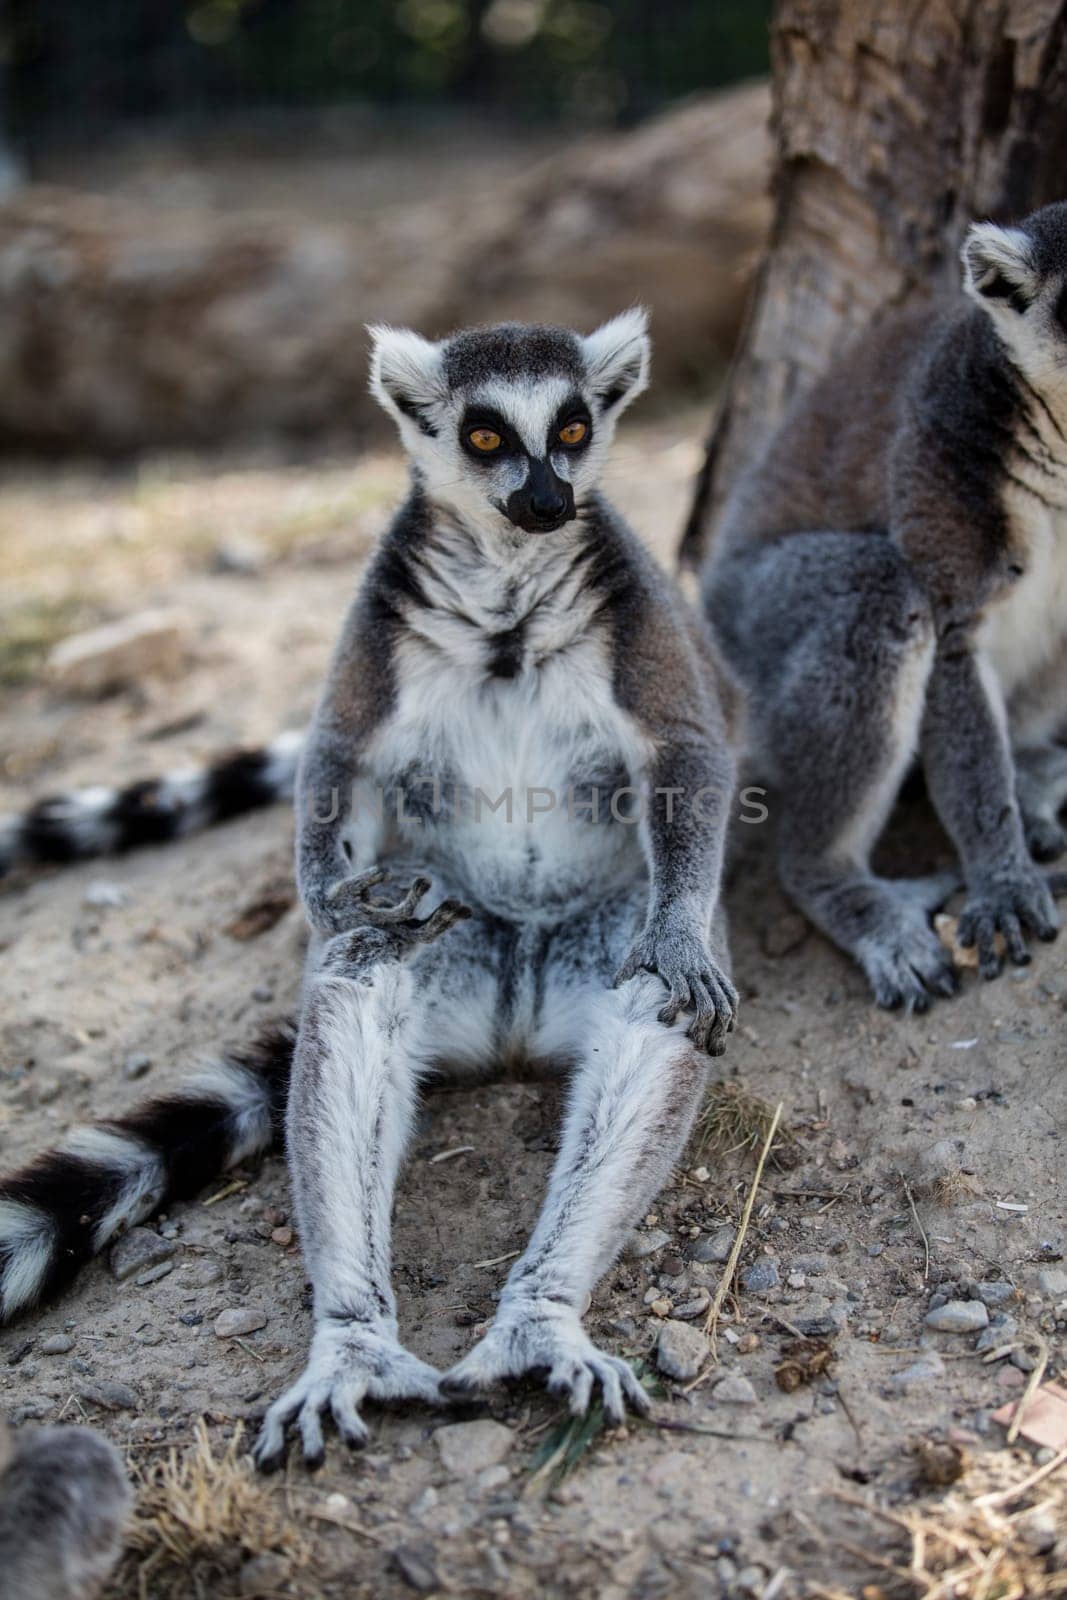 The ring-tailed lemur (Lemur catta) by emirkoo